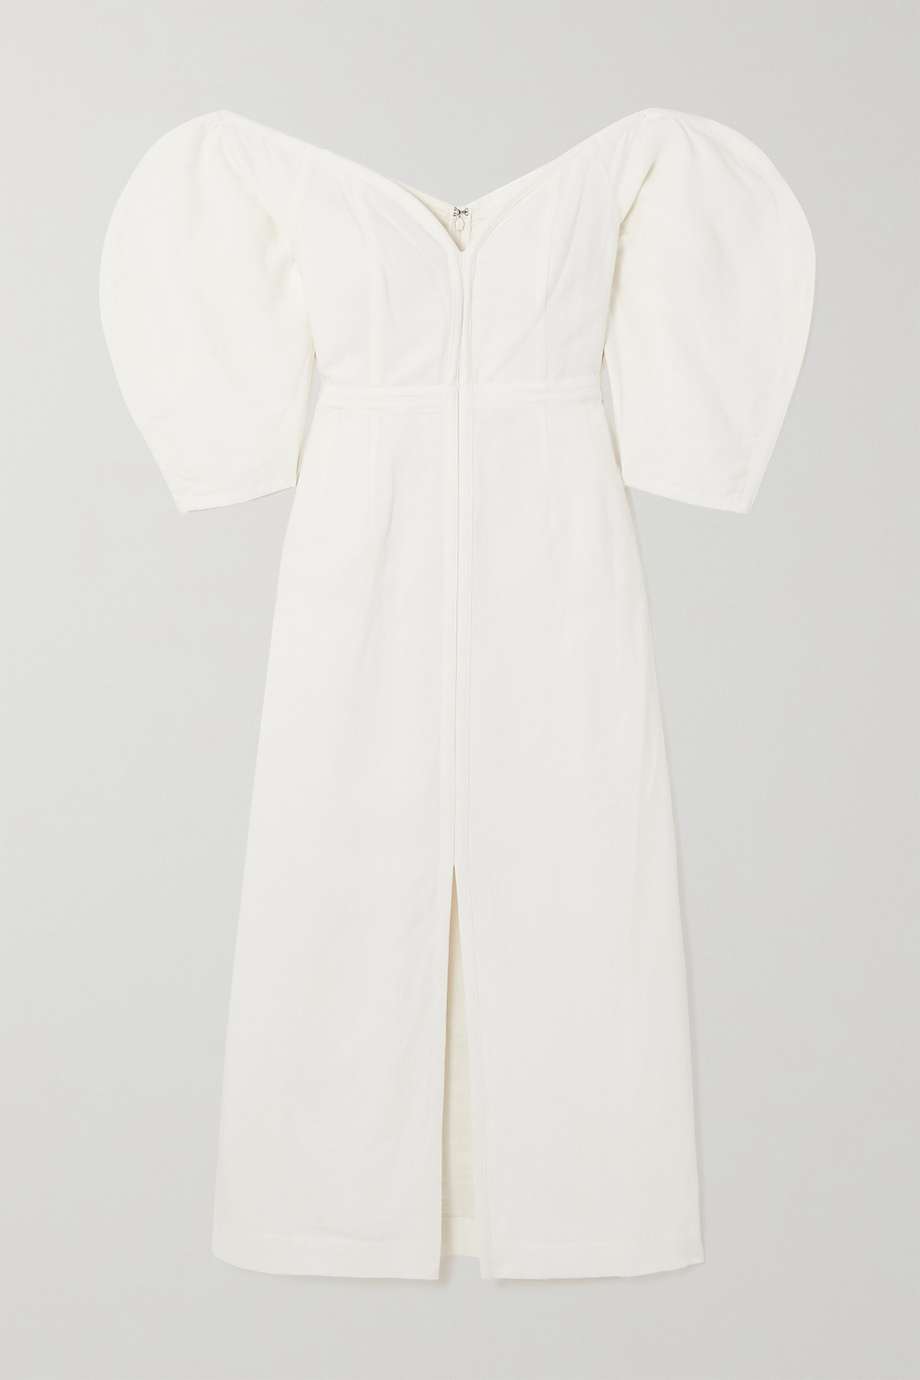 Mara Hoffman + Net Sustain Leonara Off-The-Shoulder Tencel Lyocell and Linen-Blend Midi Dress